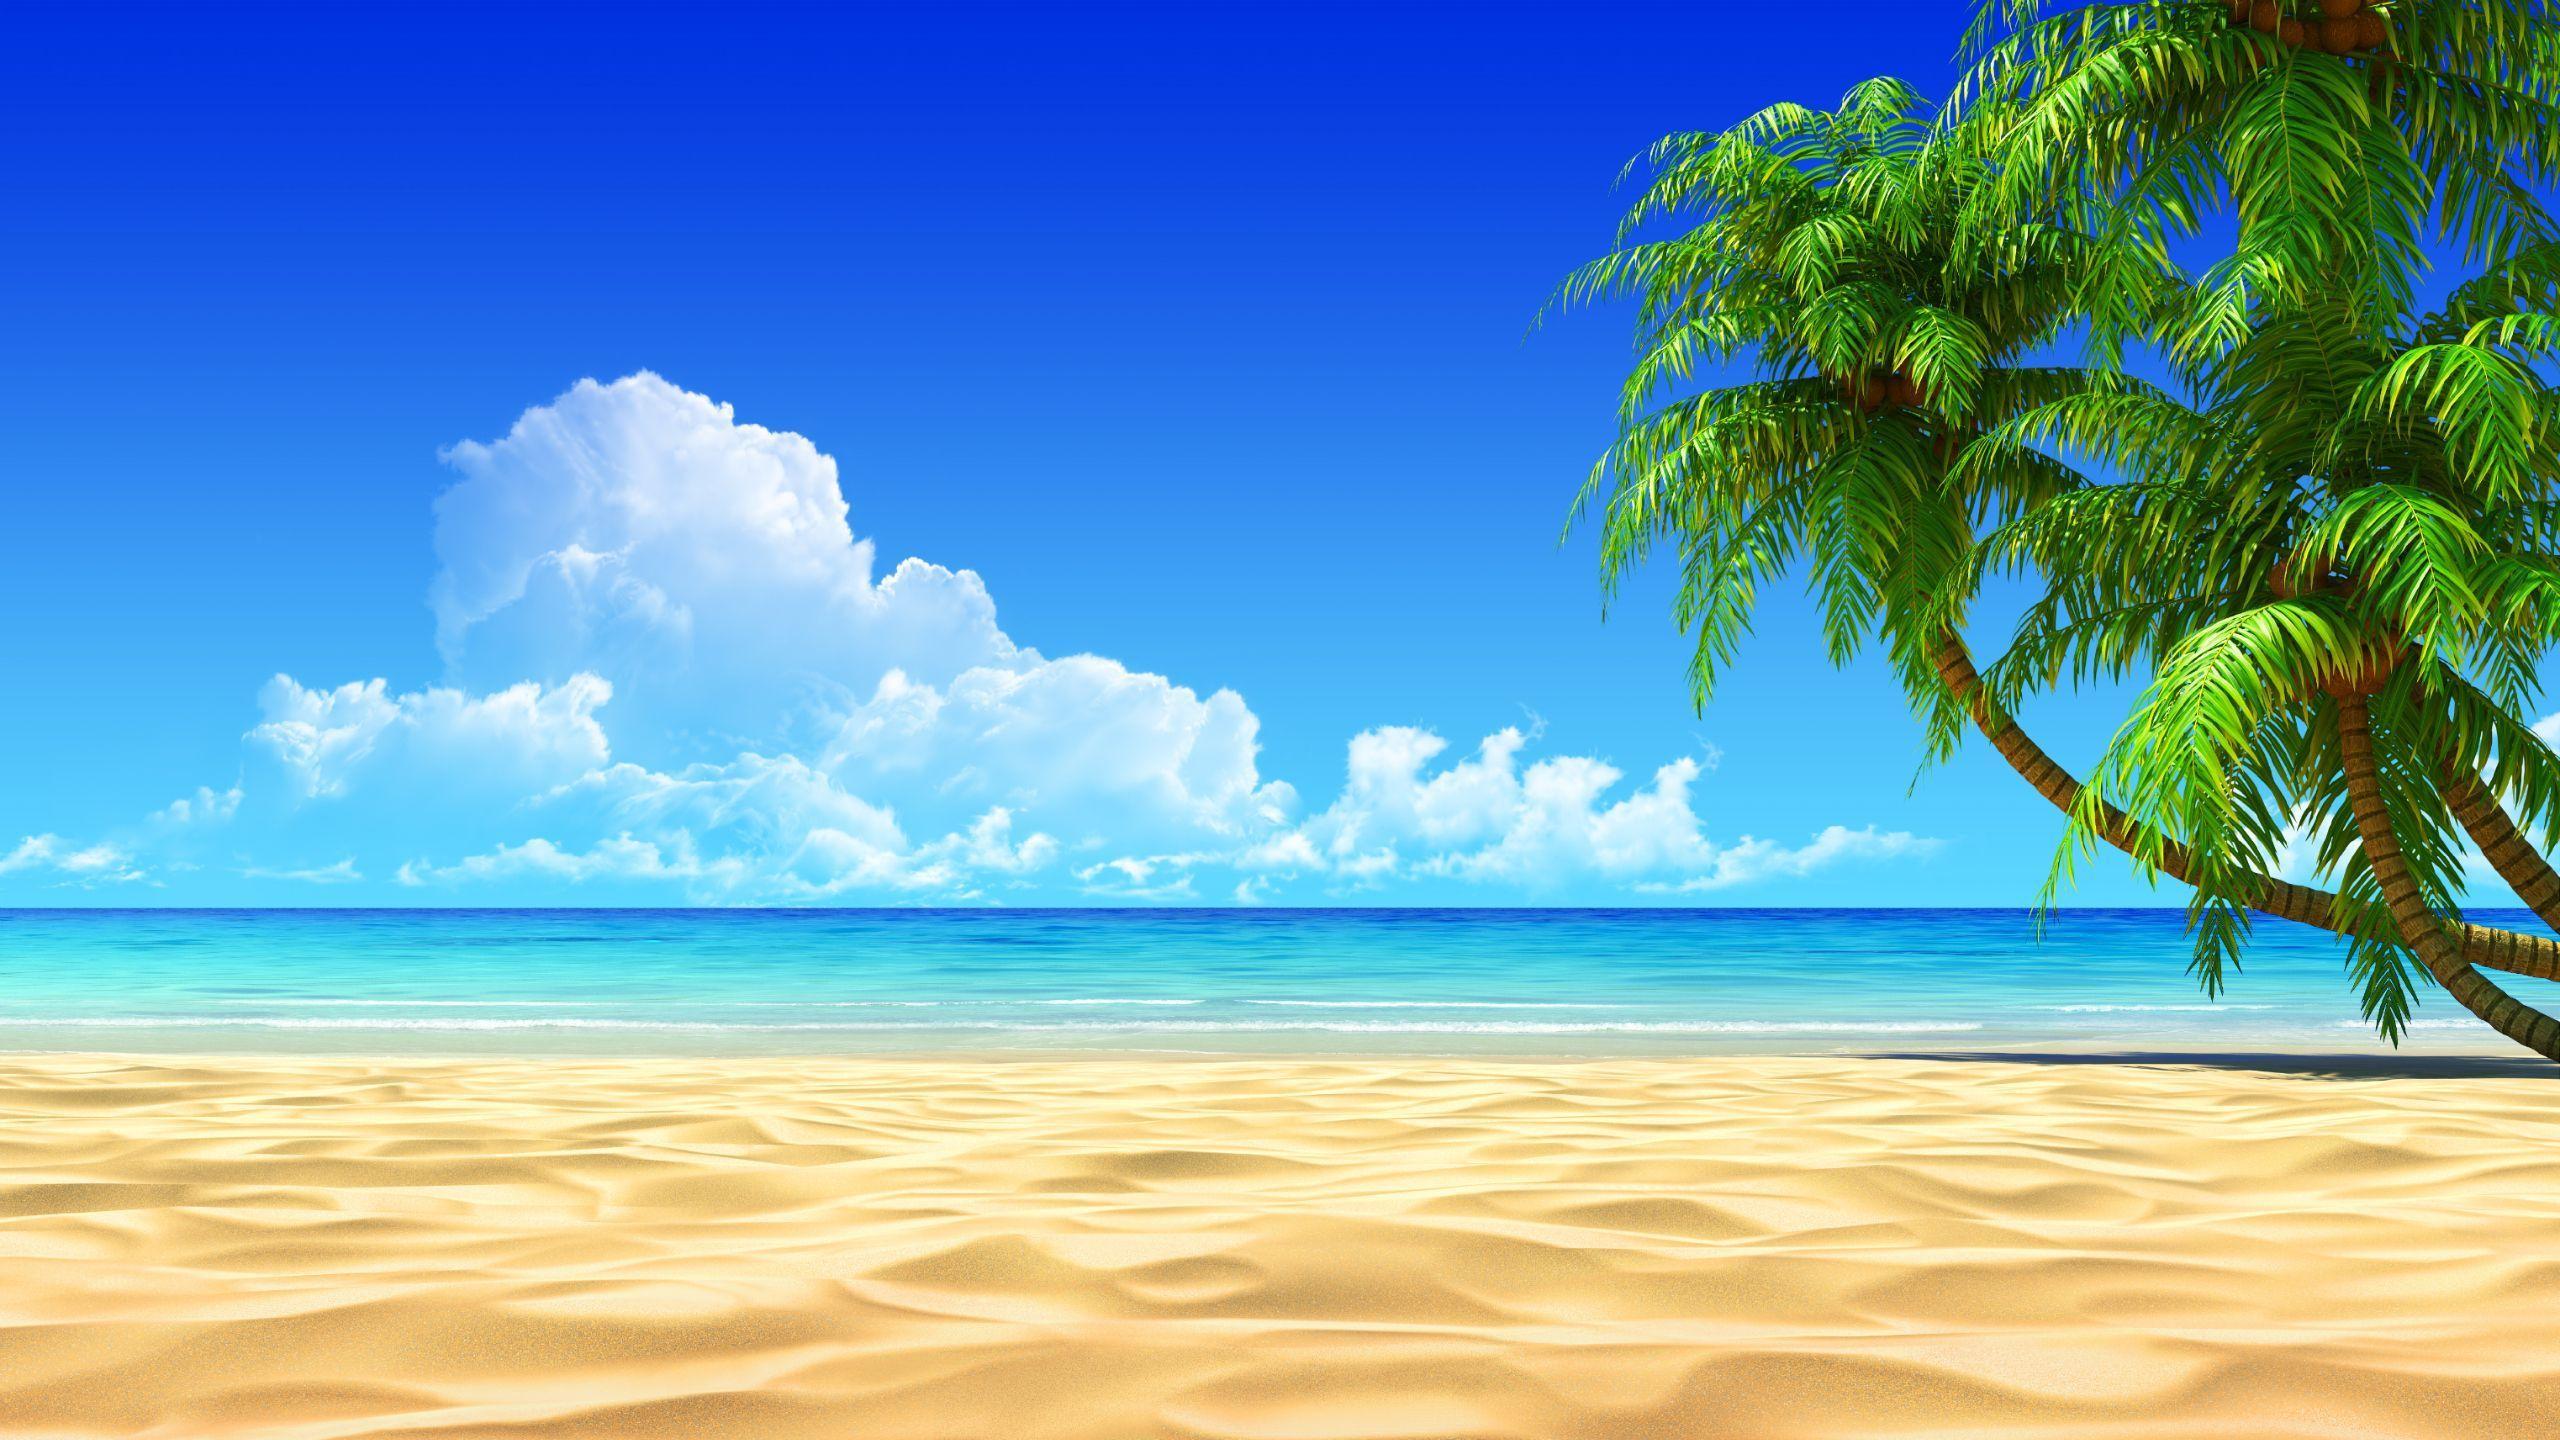 Beach Landscape Wallpapers - Top Free Beach Landscape Backgrounds - WallpaperAccess